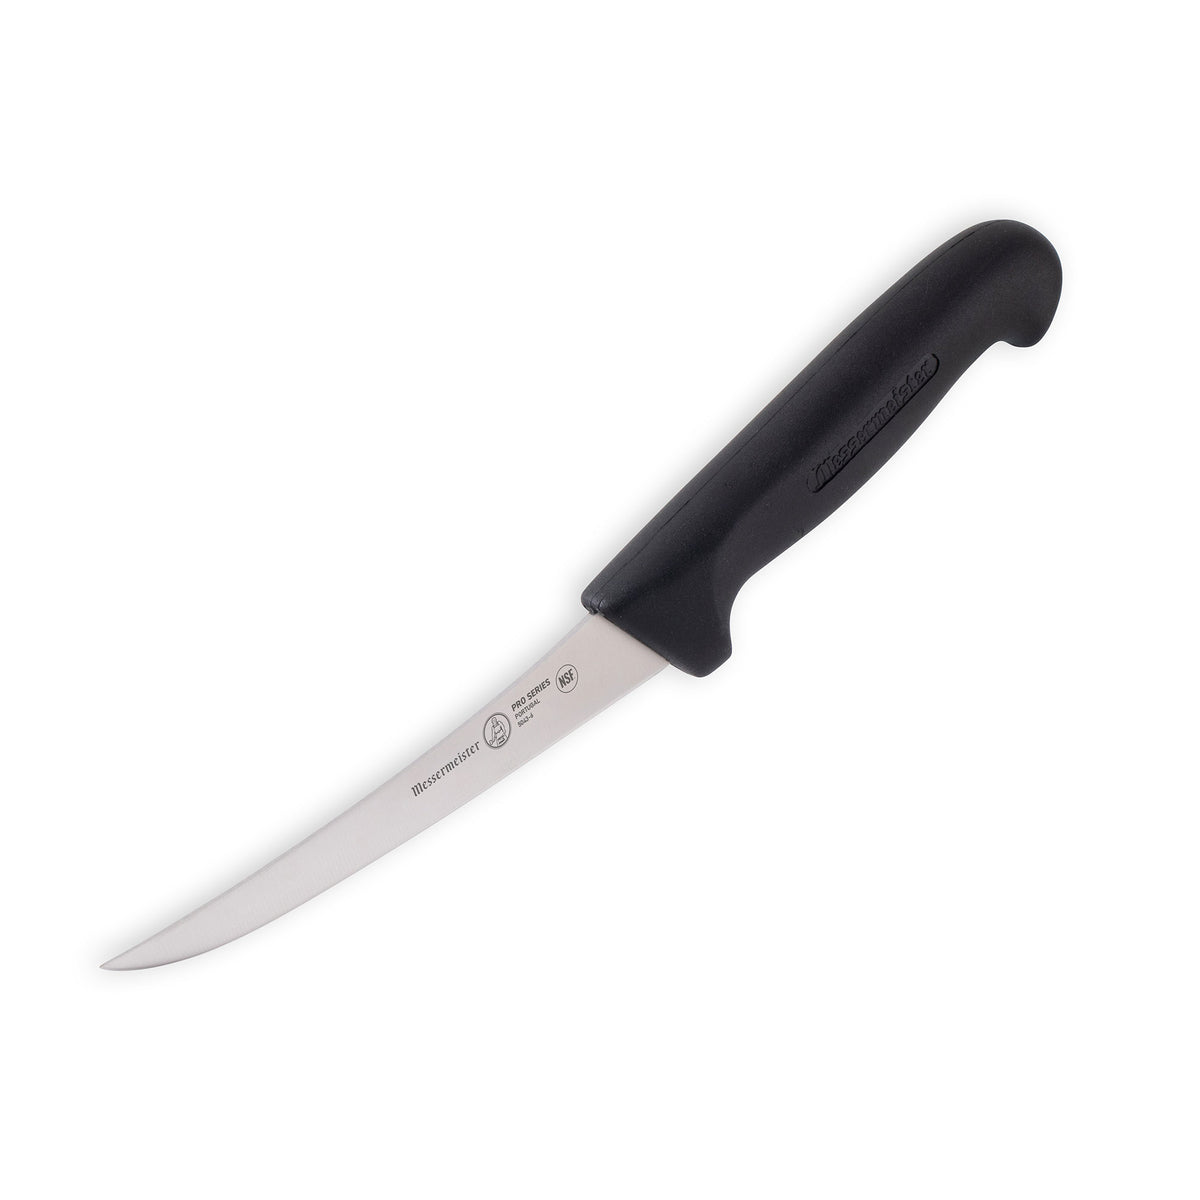 6 Victorinox Curved Flexible Boning Knife